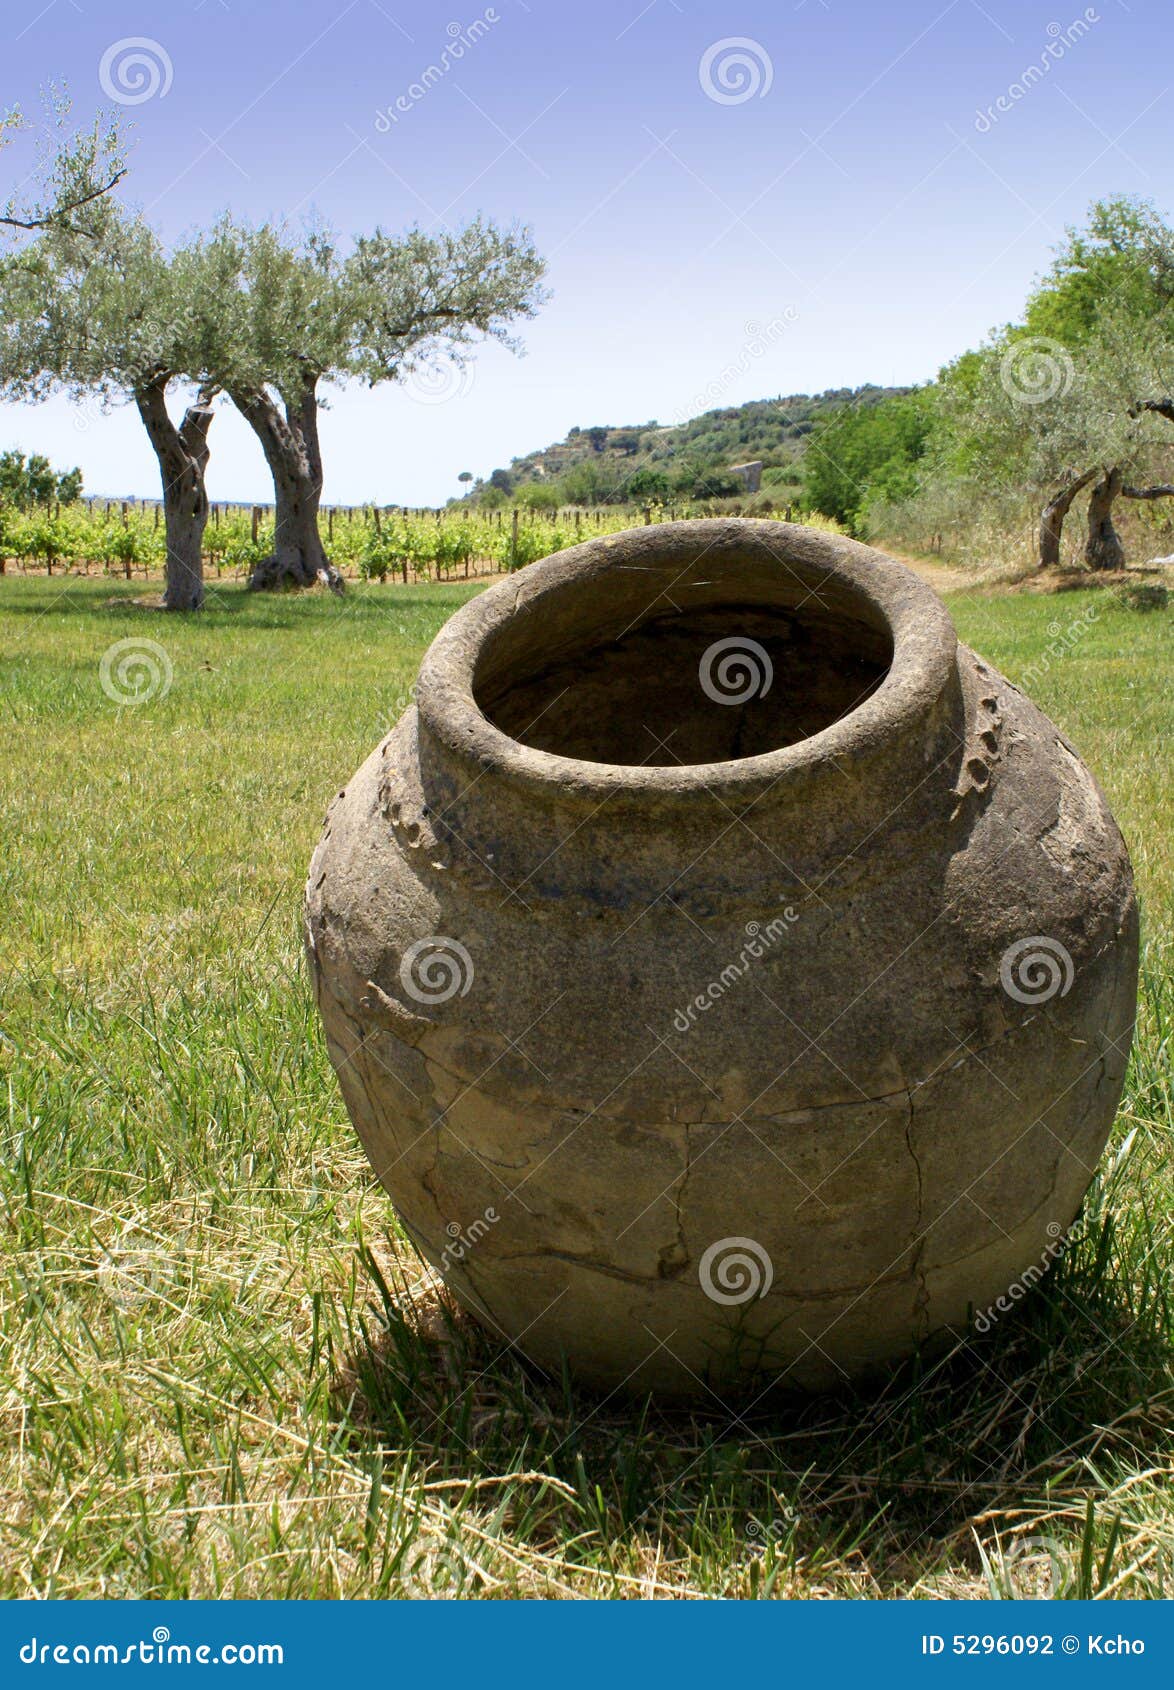 terracotta jar